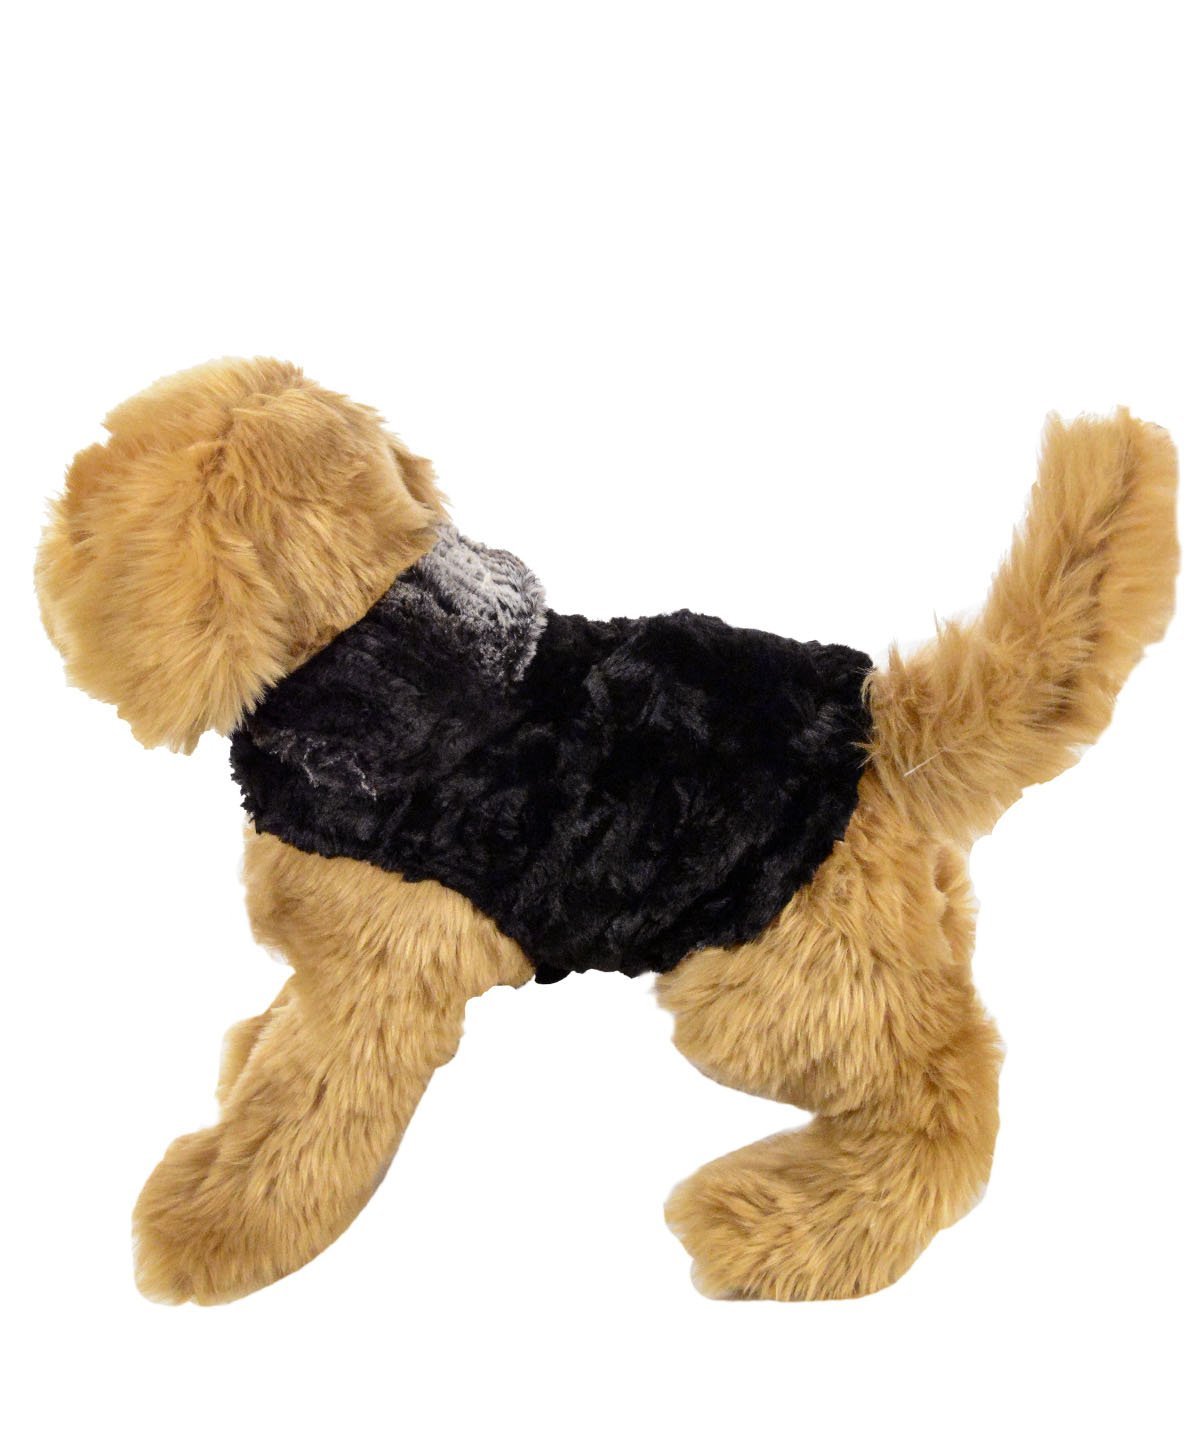 Stuffed Dog wearing Designer Handmade reversible Dog Coat Side View | Smoldering Sequoia Faux Fur reversing to Black | Handmade by Pandemonium Millinery Seattle, WA USA